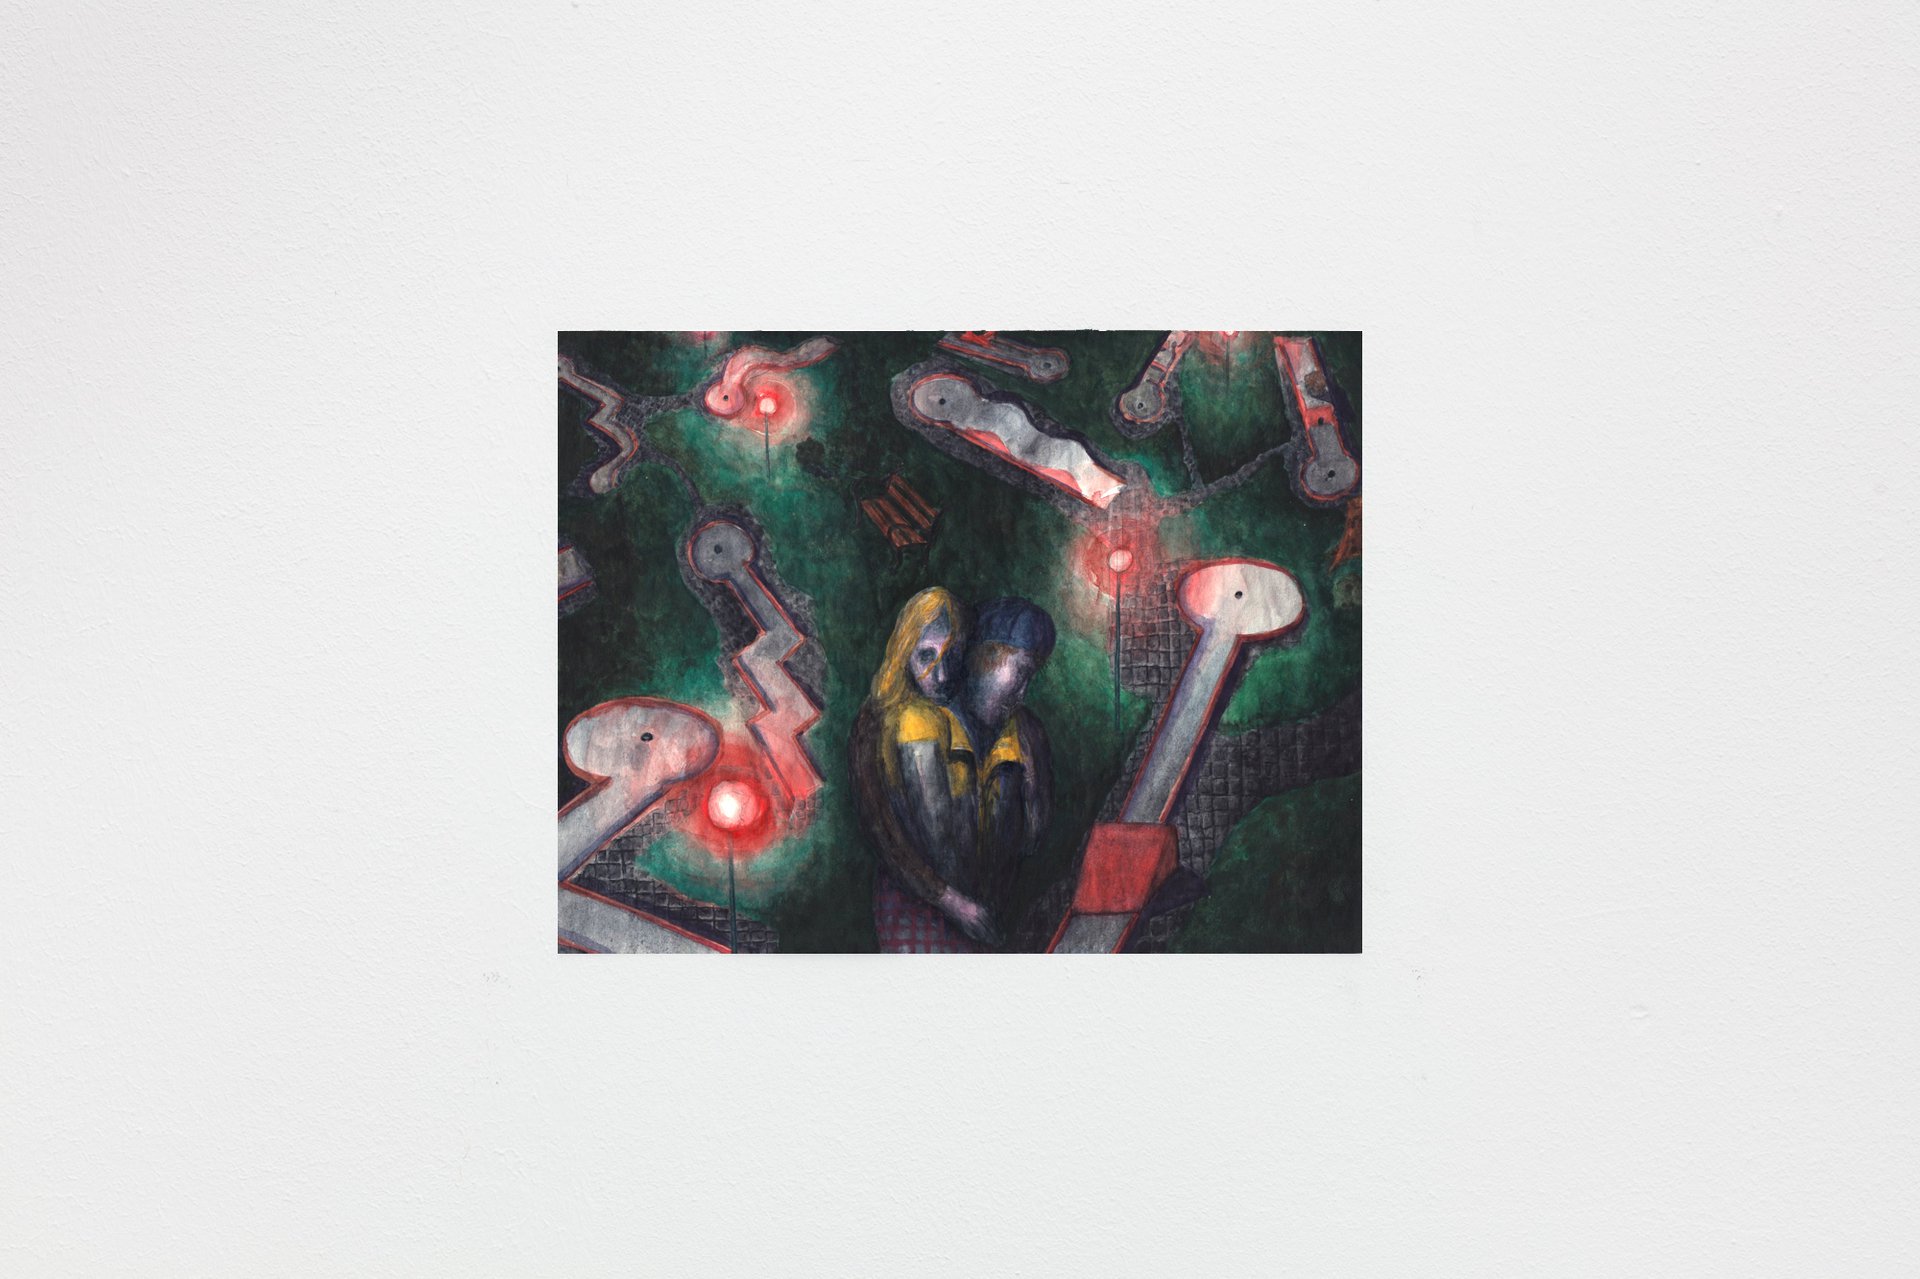 Matthias NogglerSoft Mumble, 2020Gouache, watercolor and pencil on paper19,5 x 25 cm